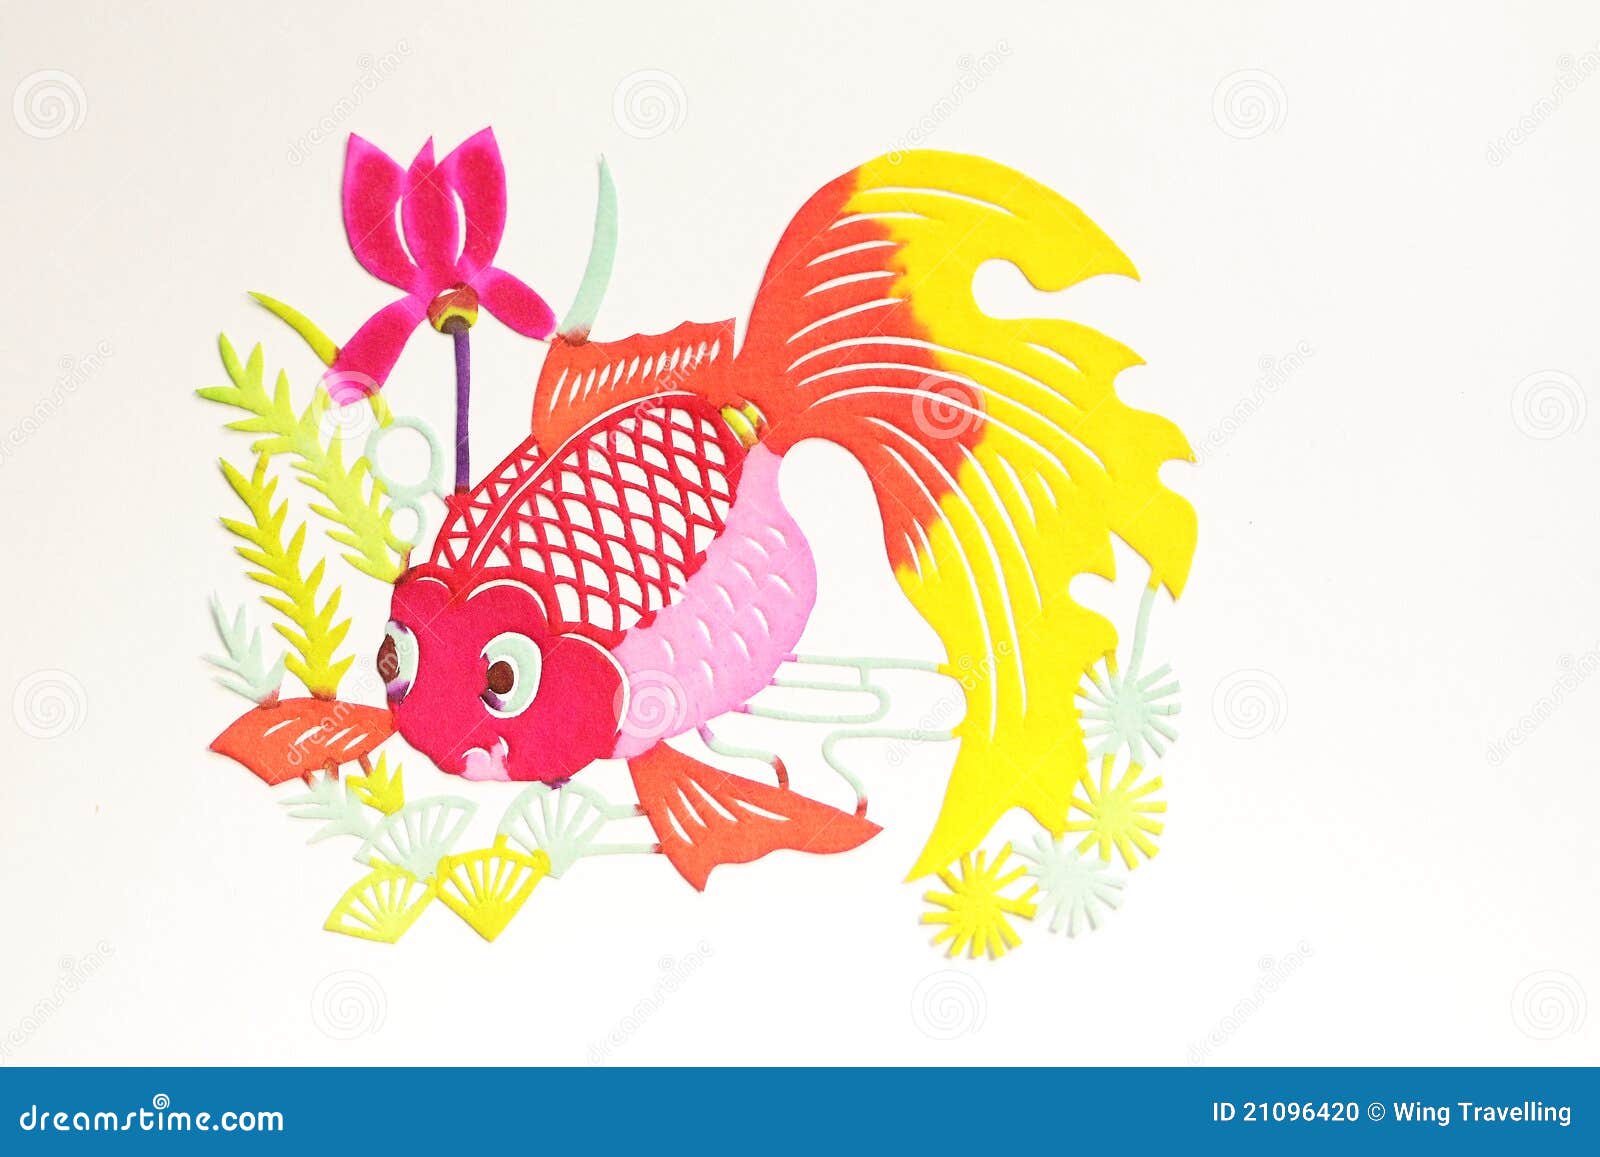 Paper-cut of golden fish stock photo. Image of handmade - 21096420